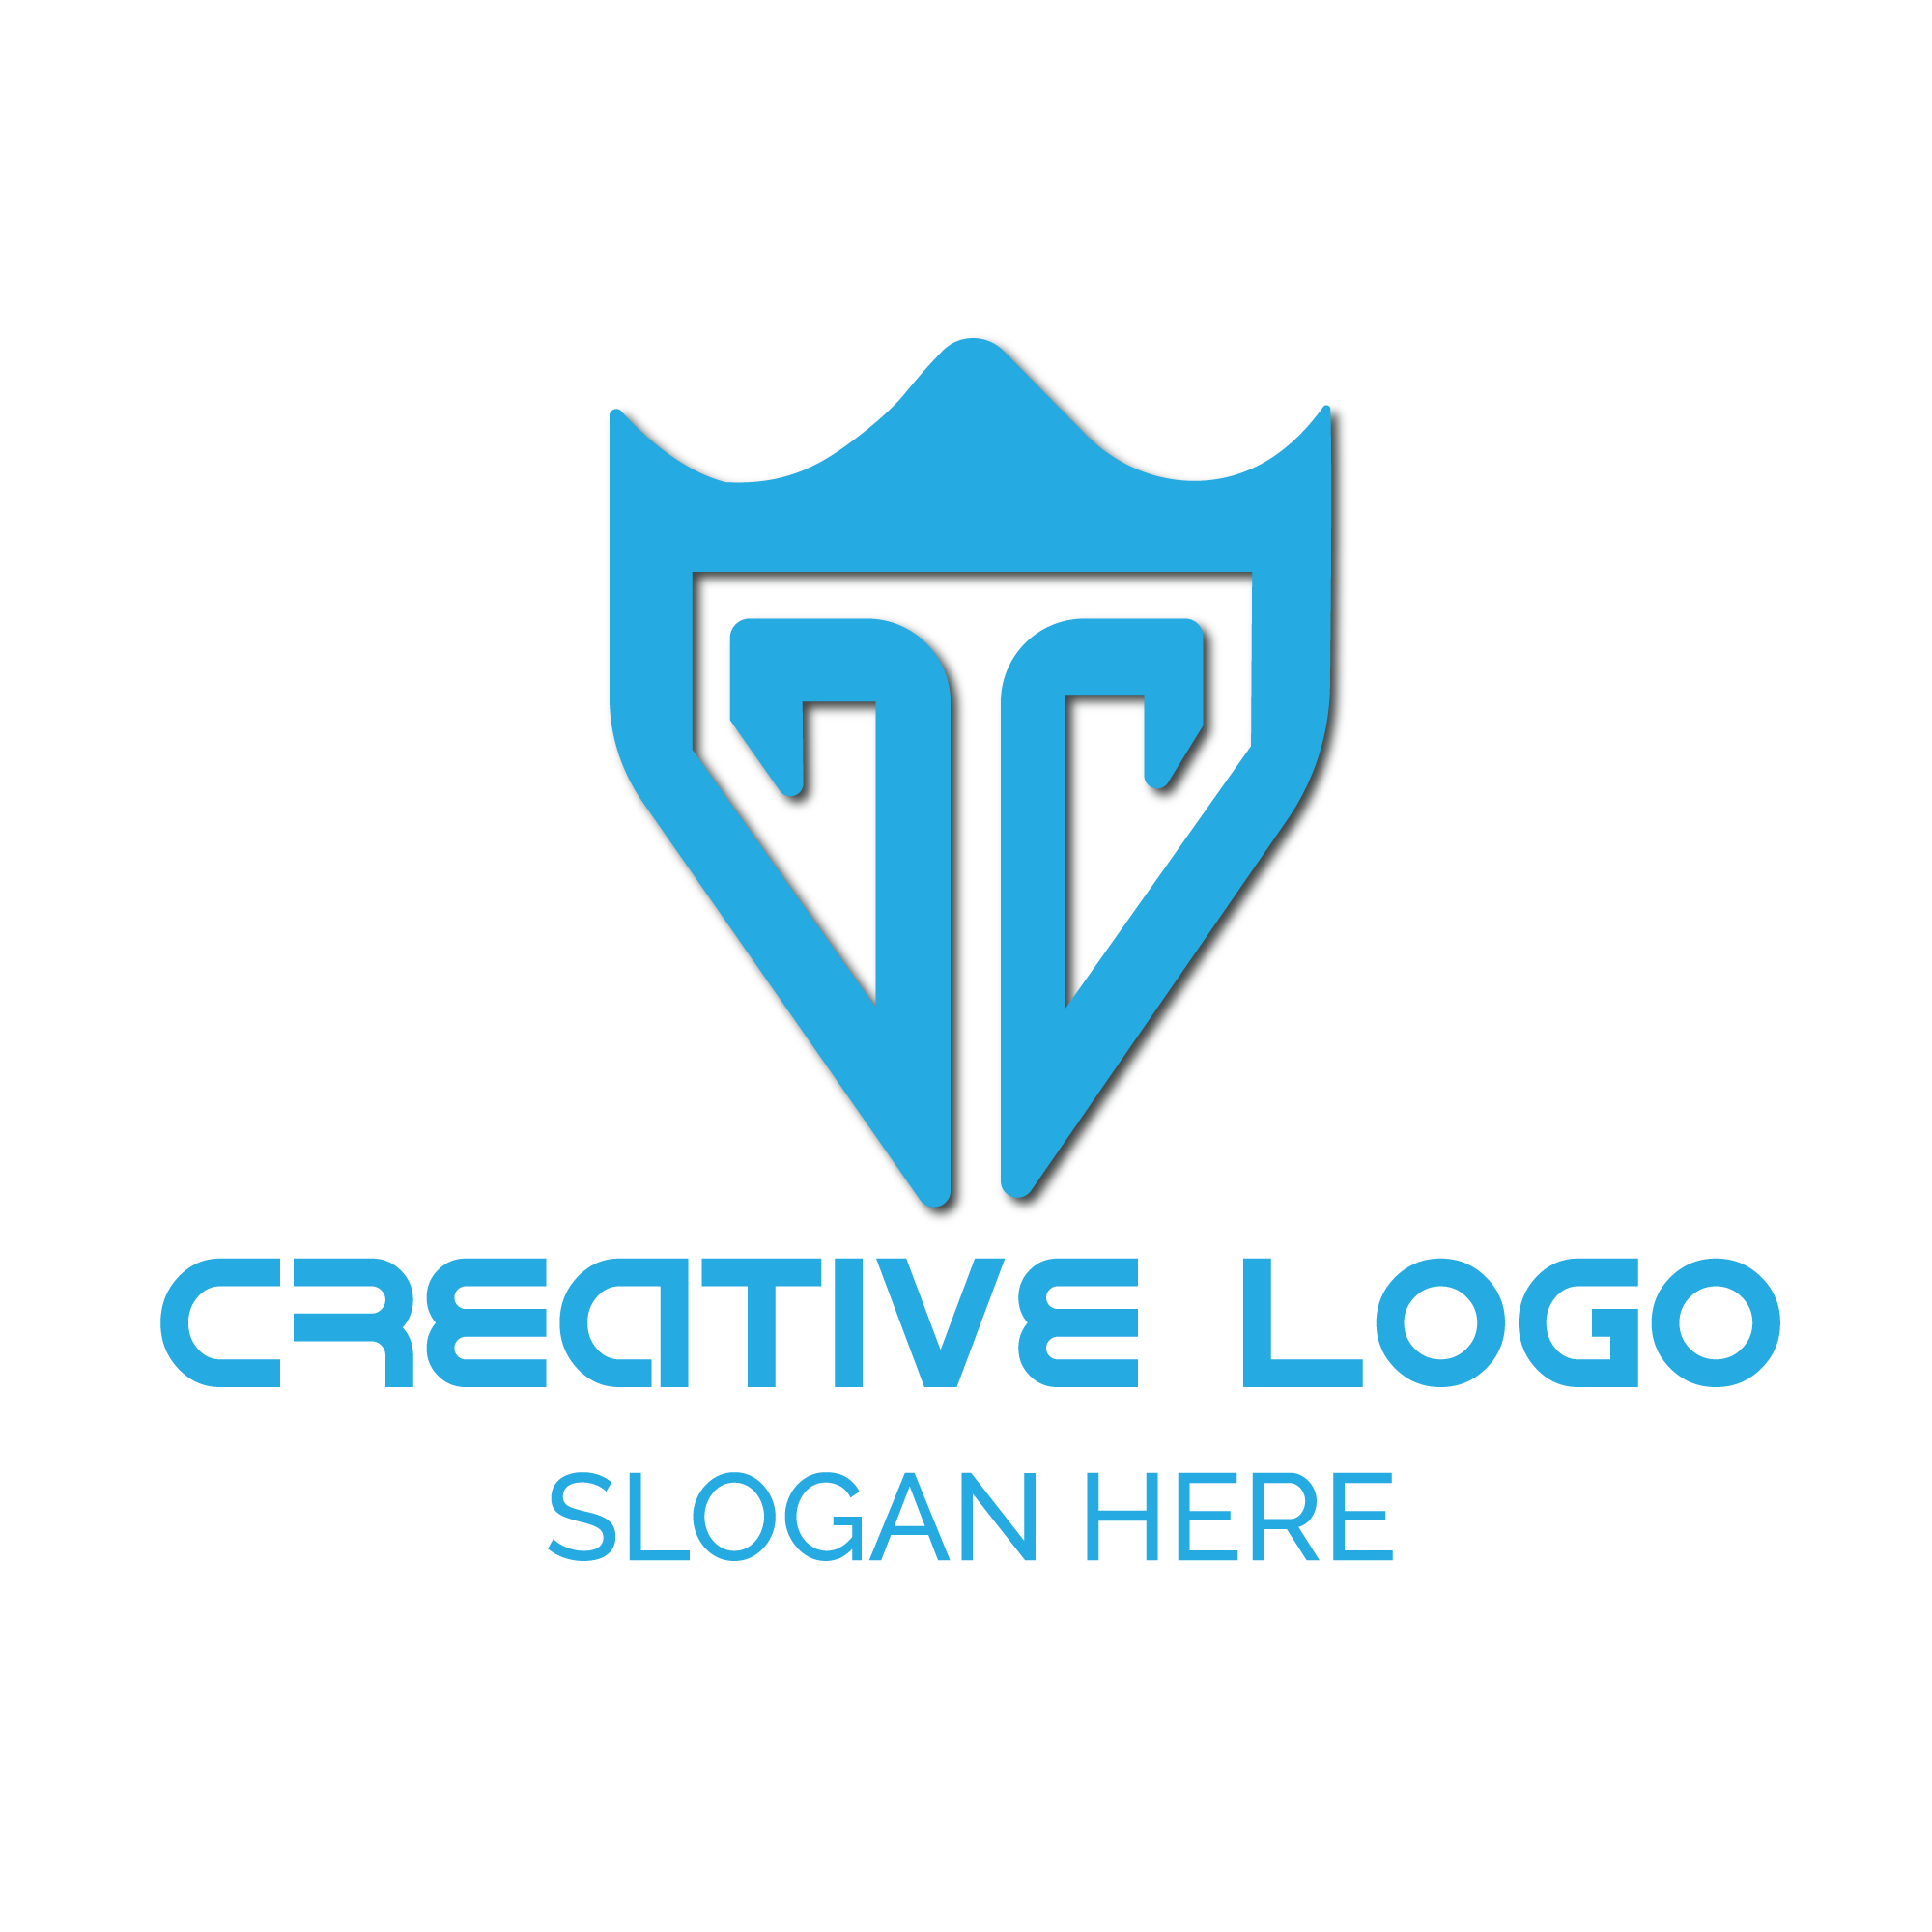 Creative Logo Design cover image.